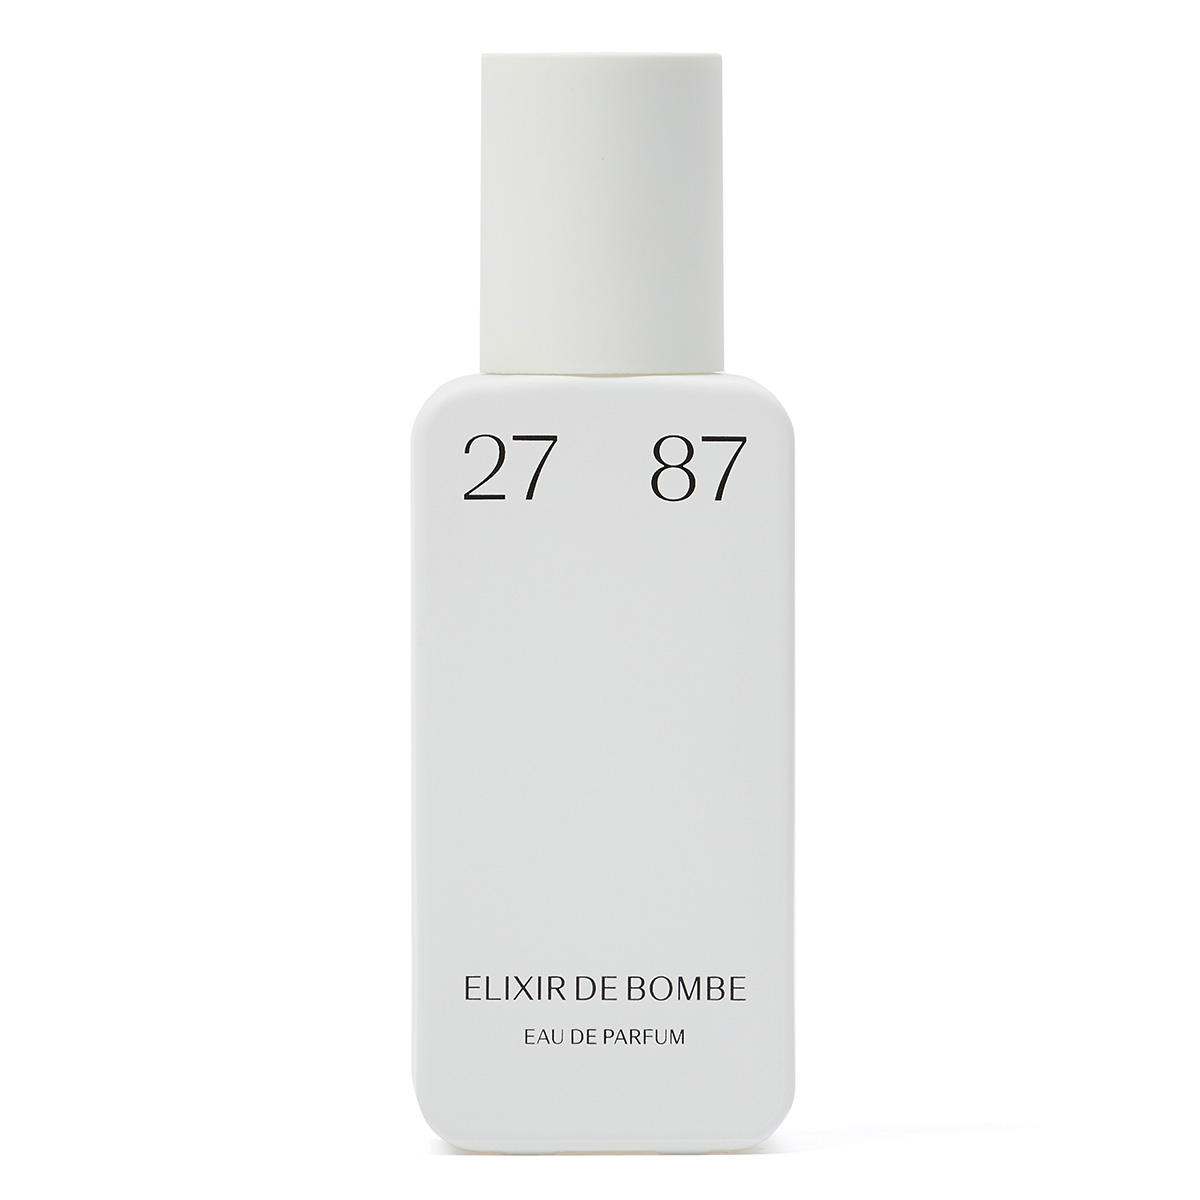 27 87 Perfumes elixir de bombe Eau de Parfum  - 1